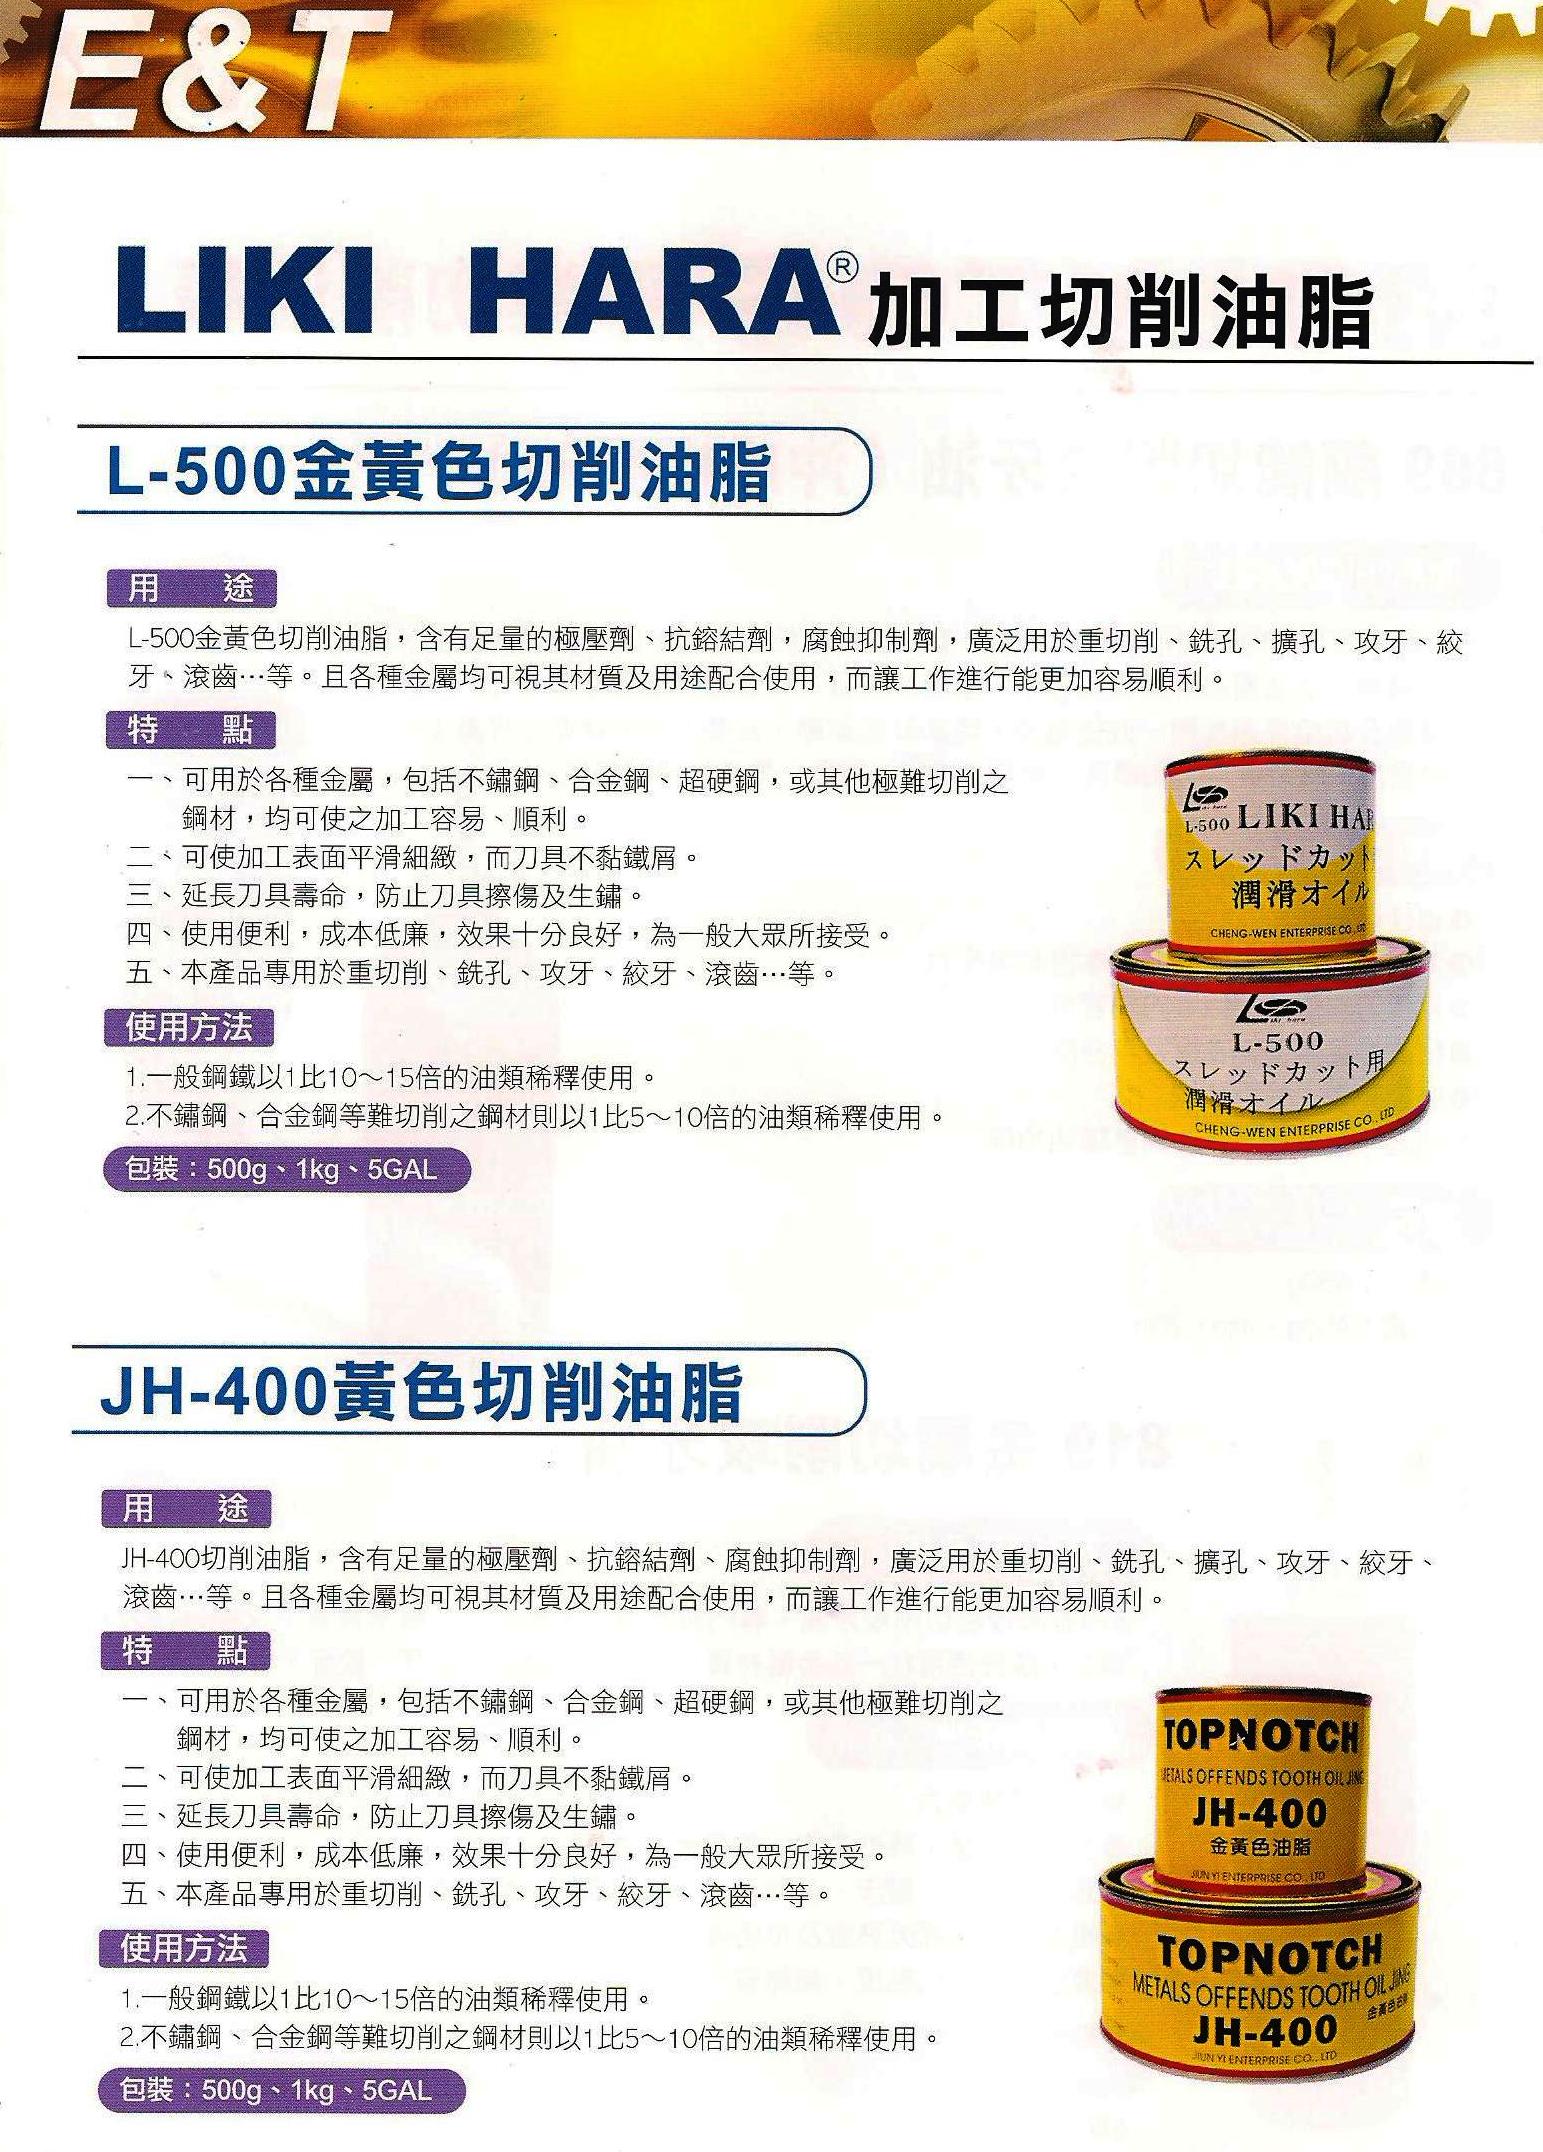 LIKI HARA  加工切削油脂 JH-400黃色切削油脂 (011-1.jpg)